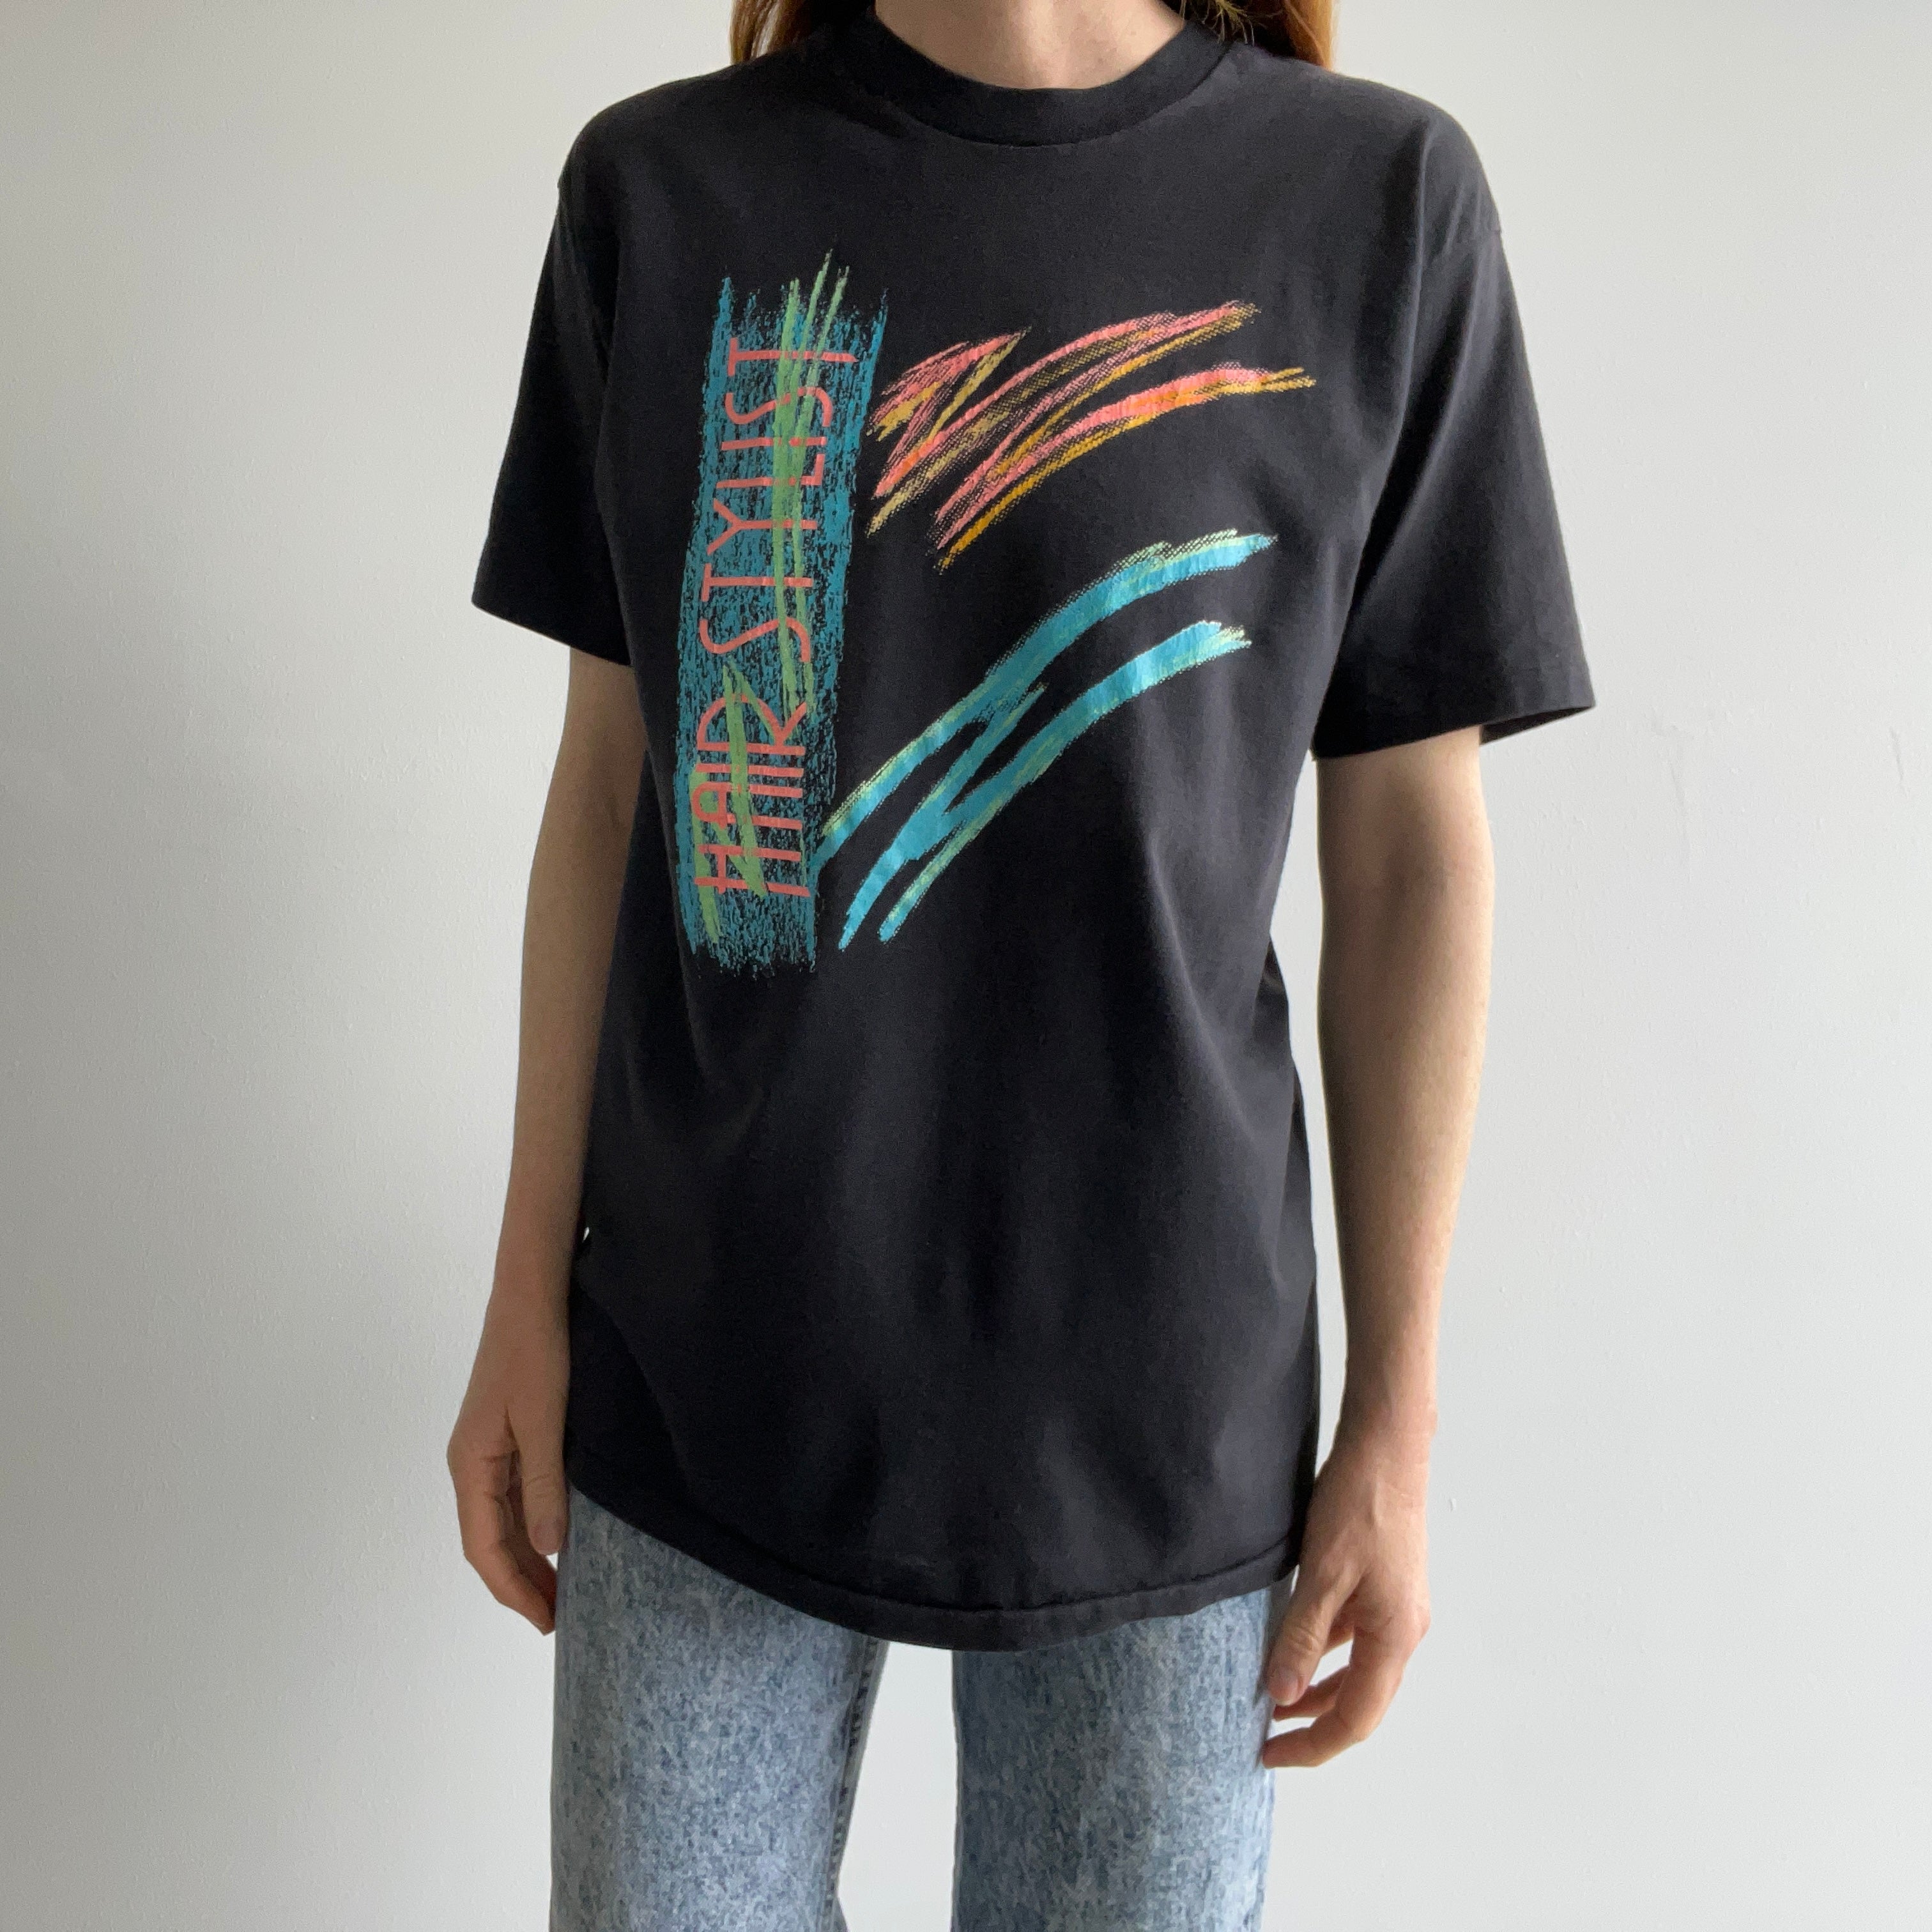 1980s Hair Stylist T-Shirt with Sun Fading